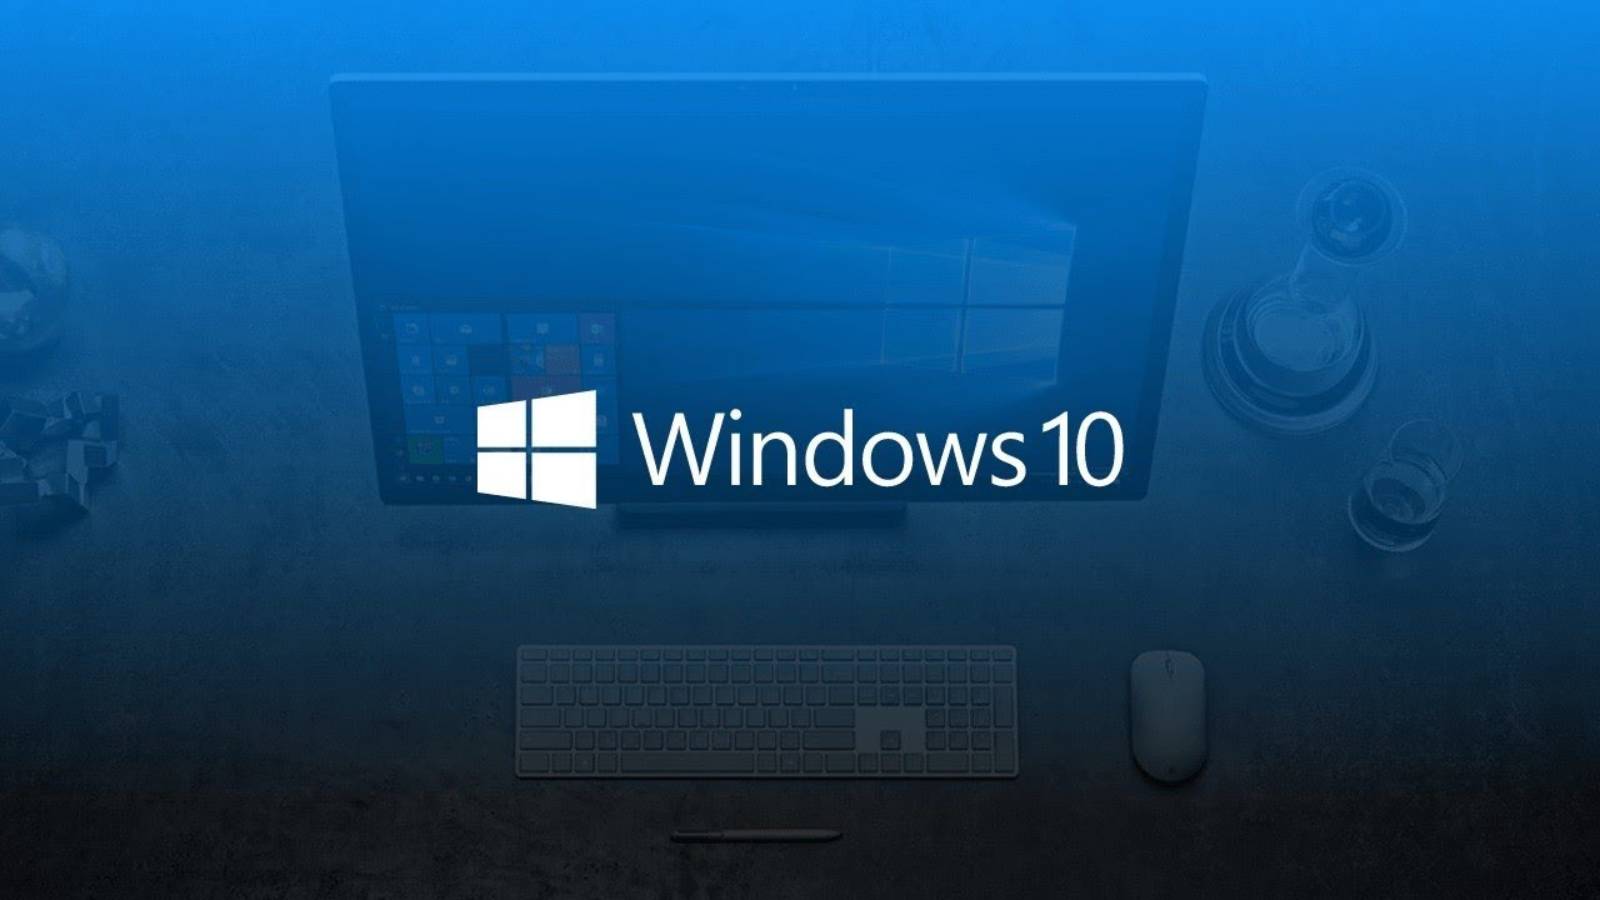 Windows 10 changes